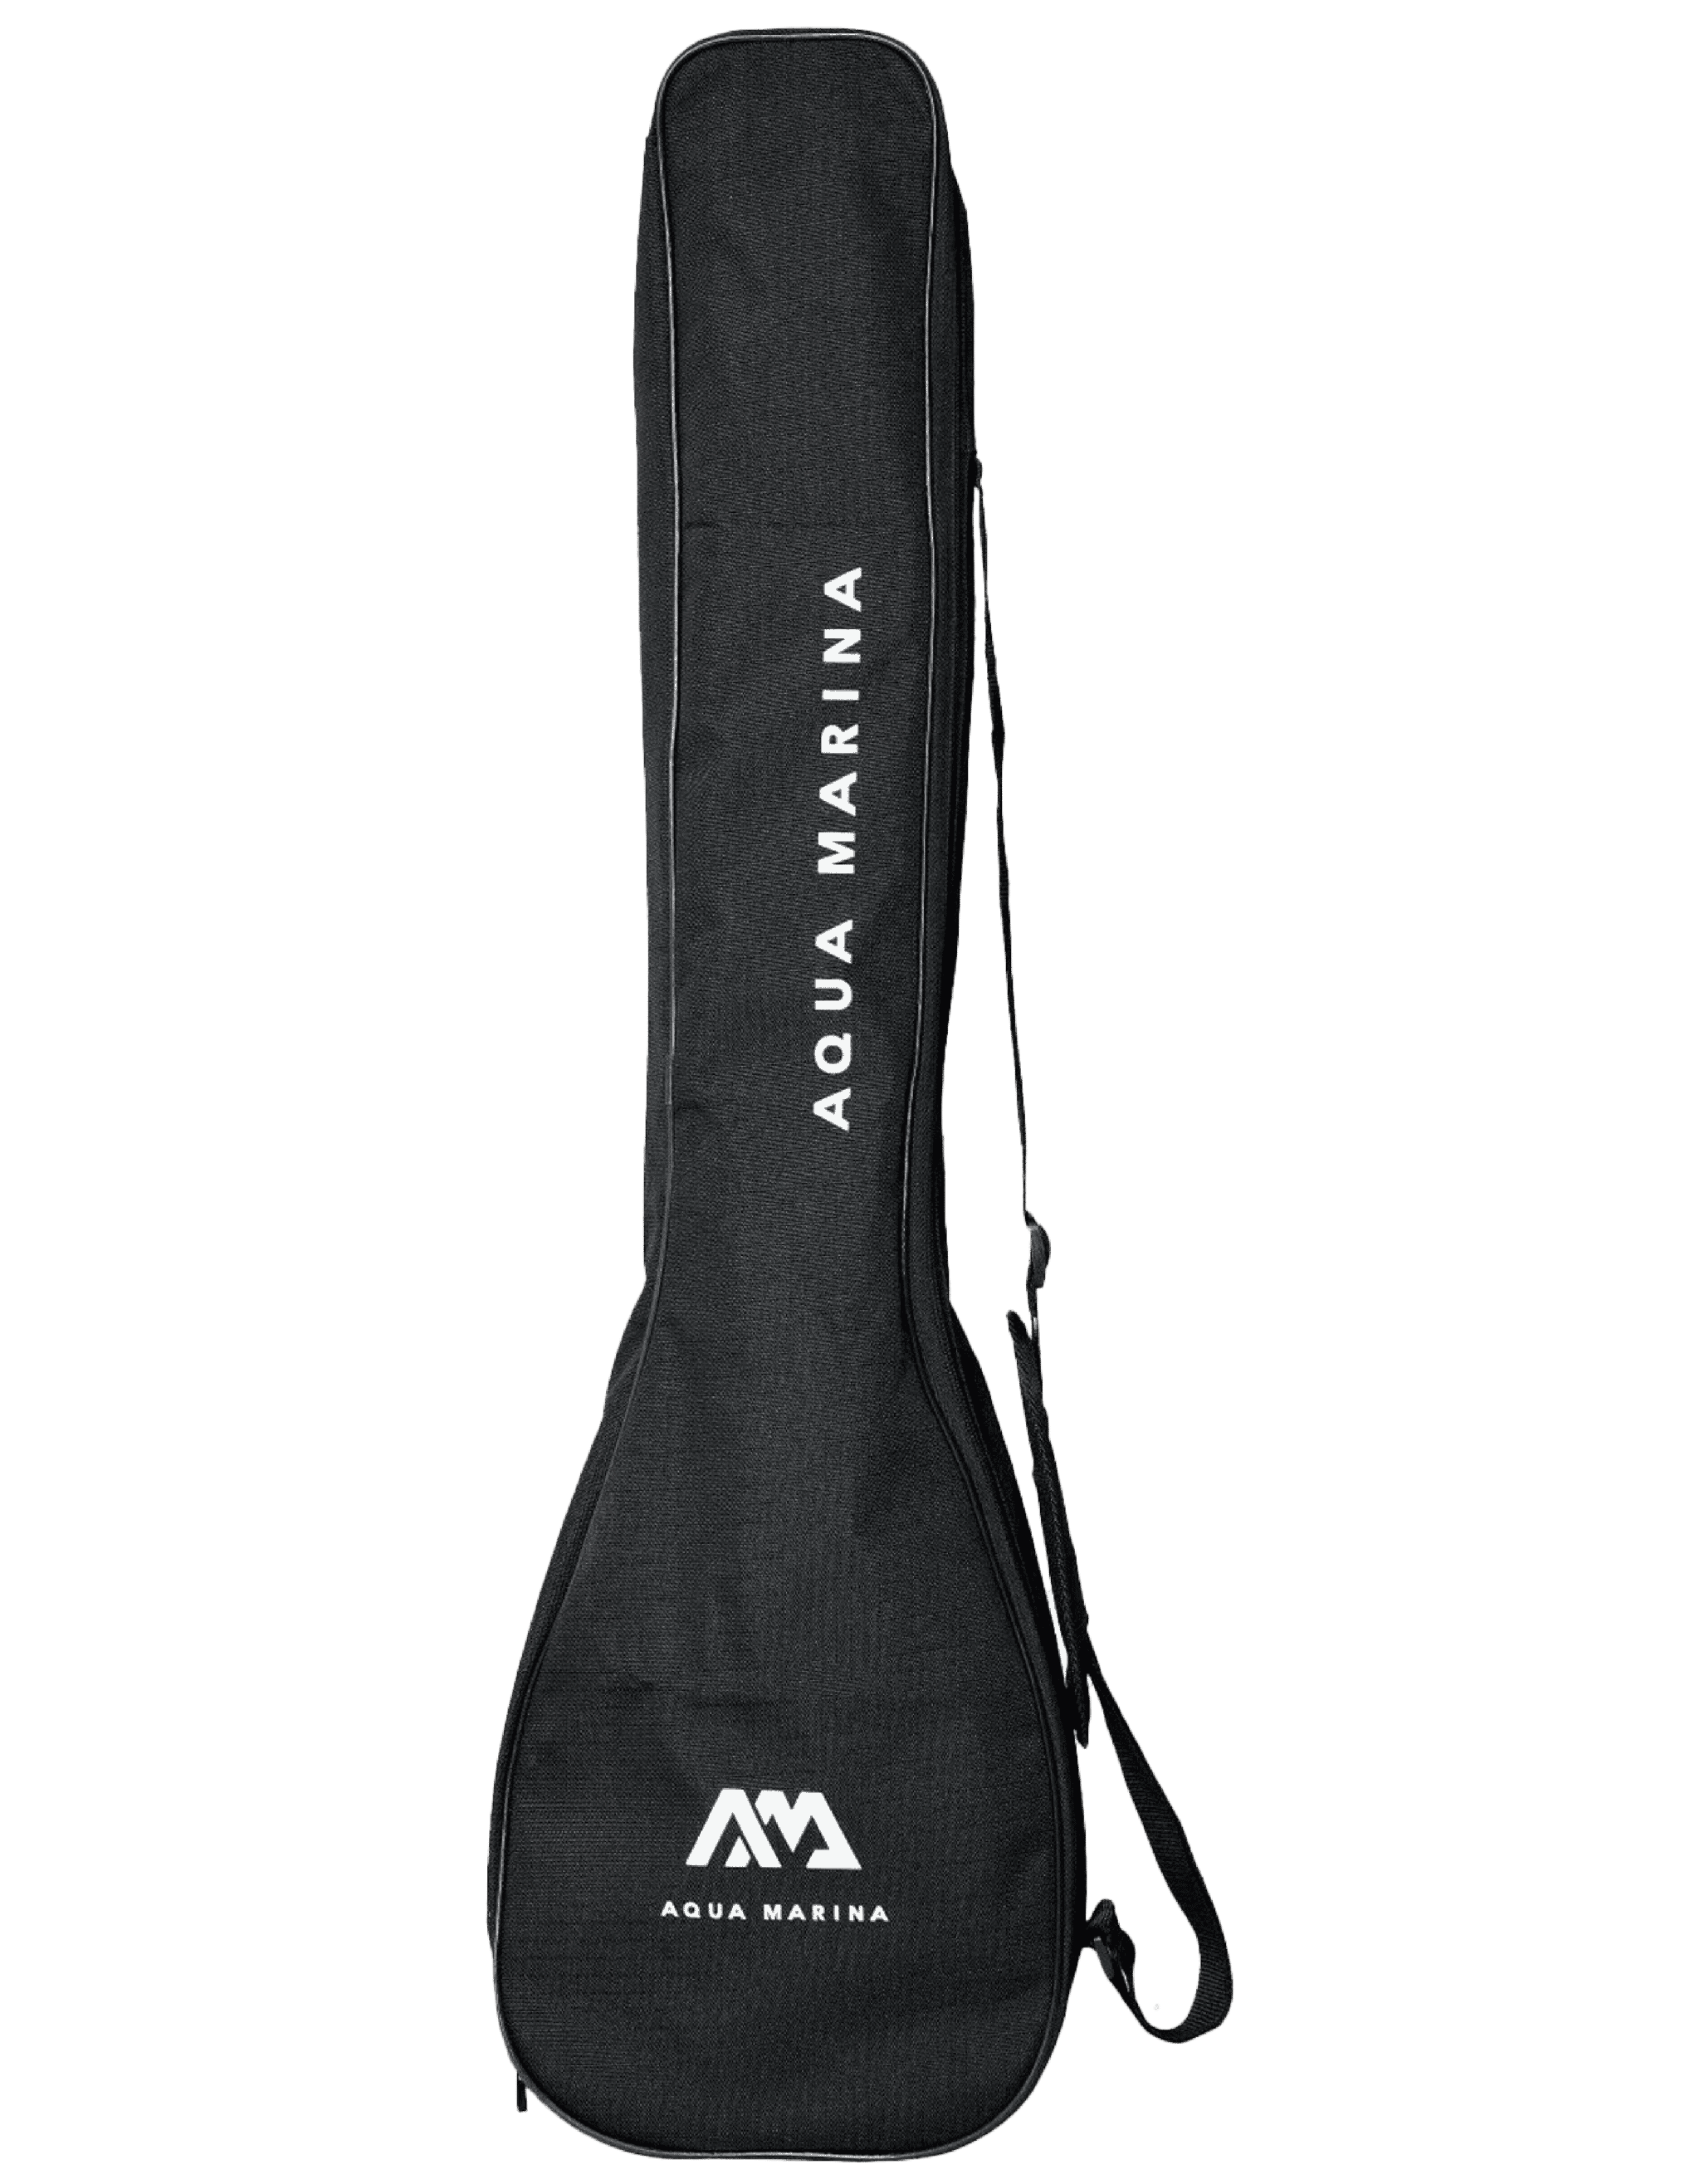 Aqua Marina Paddle Bag